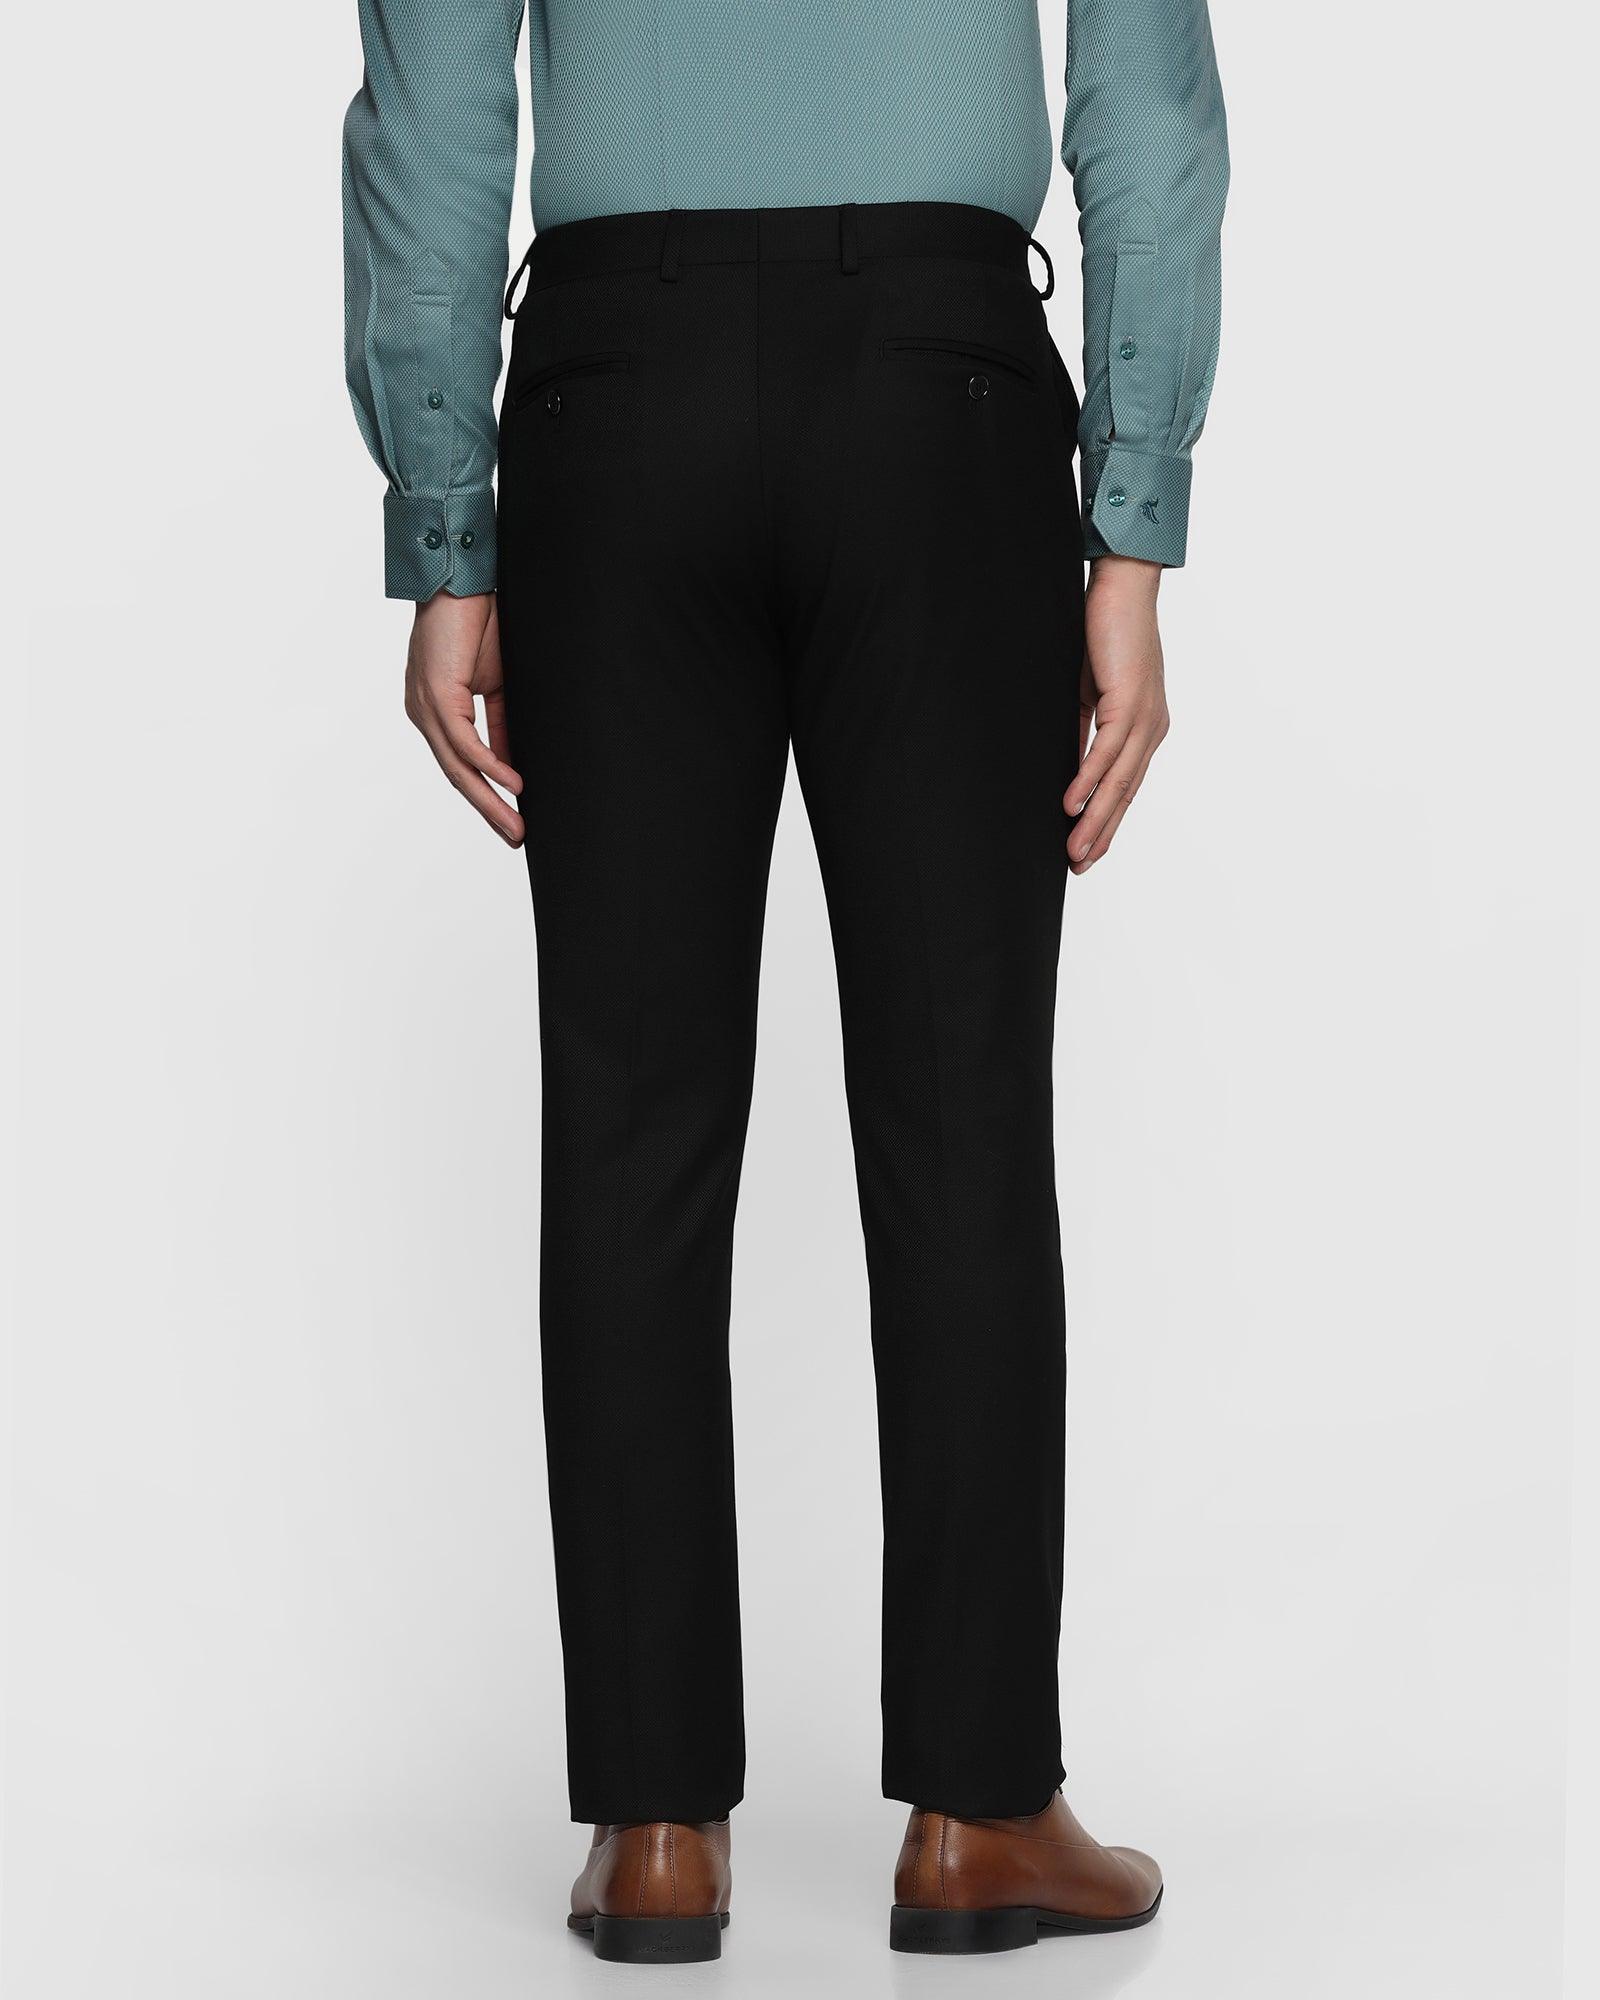 Slim Fit B-91 Formal Black Textured Trouser - Bloss